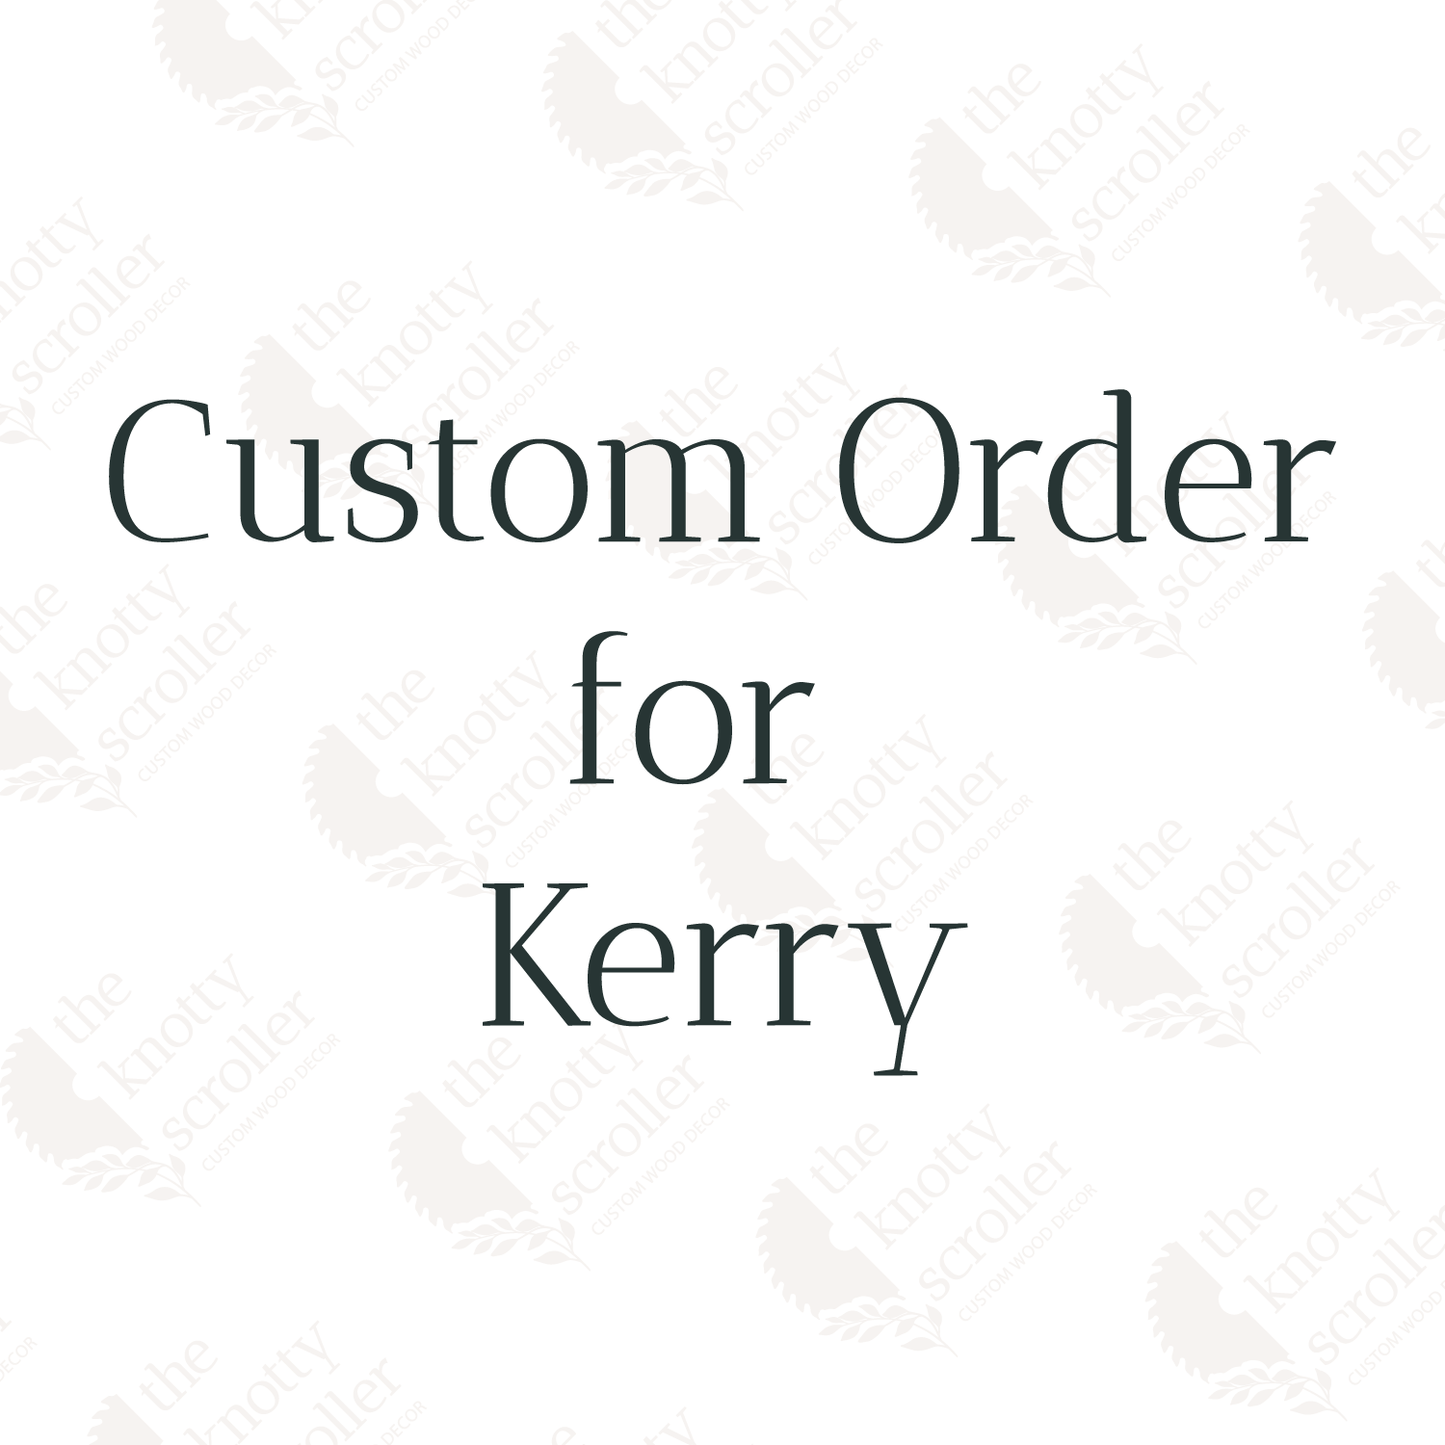 Custom order for Kerry